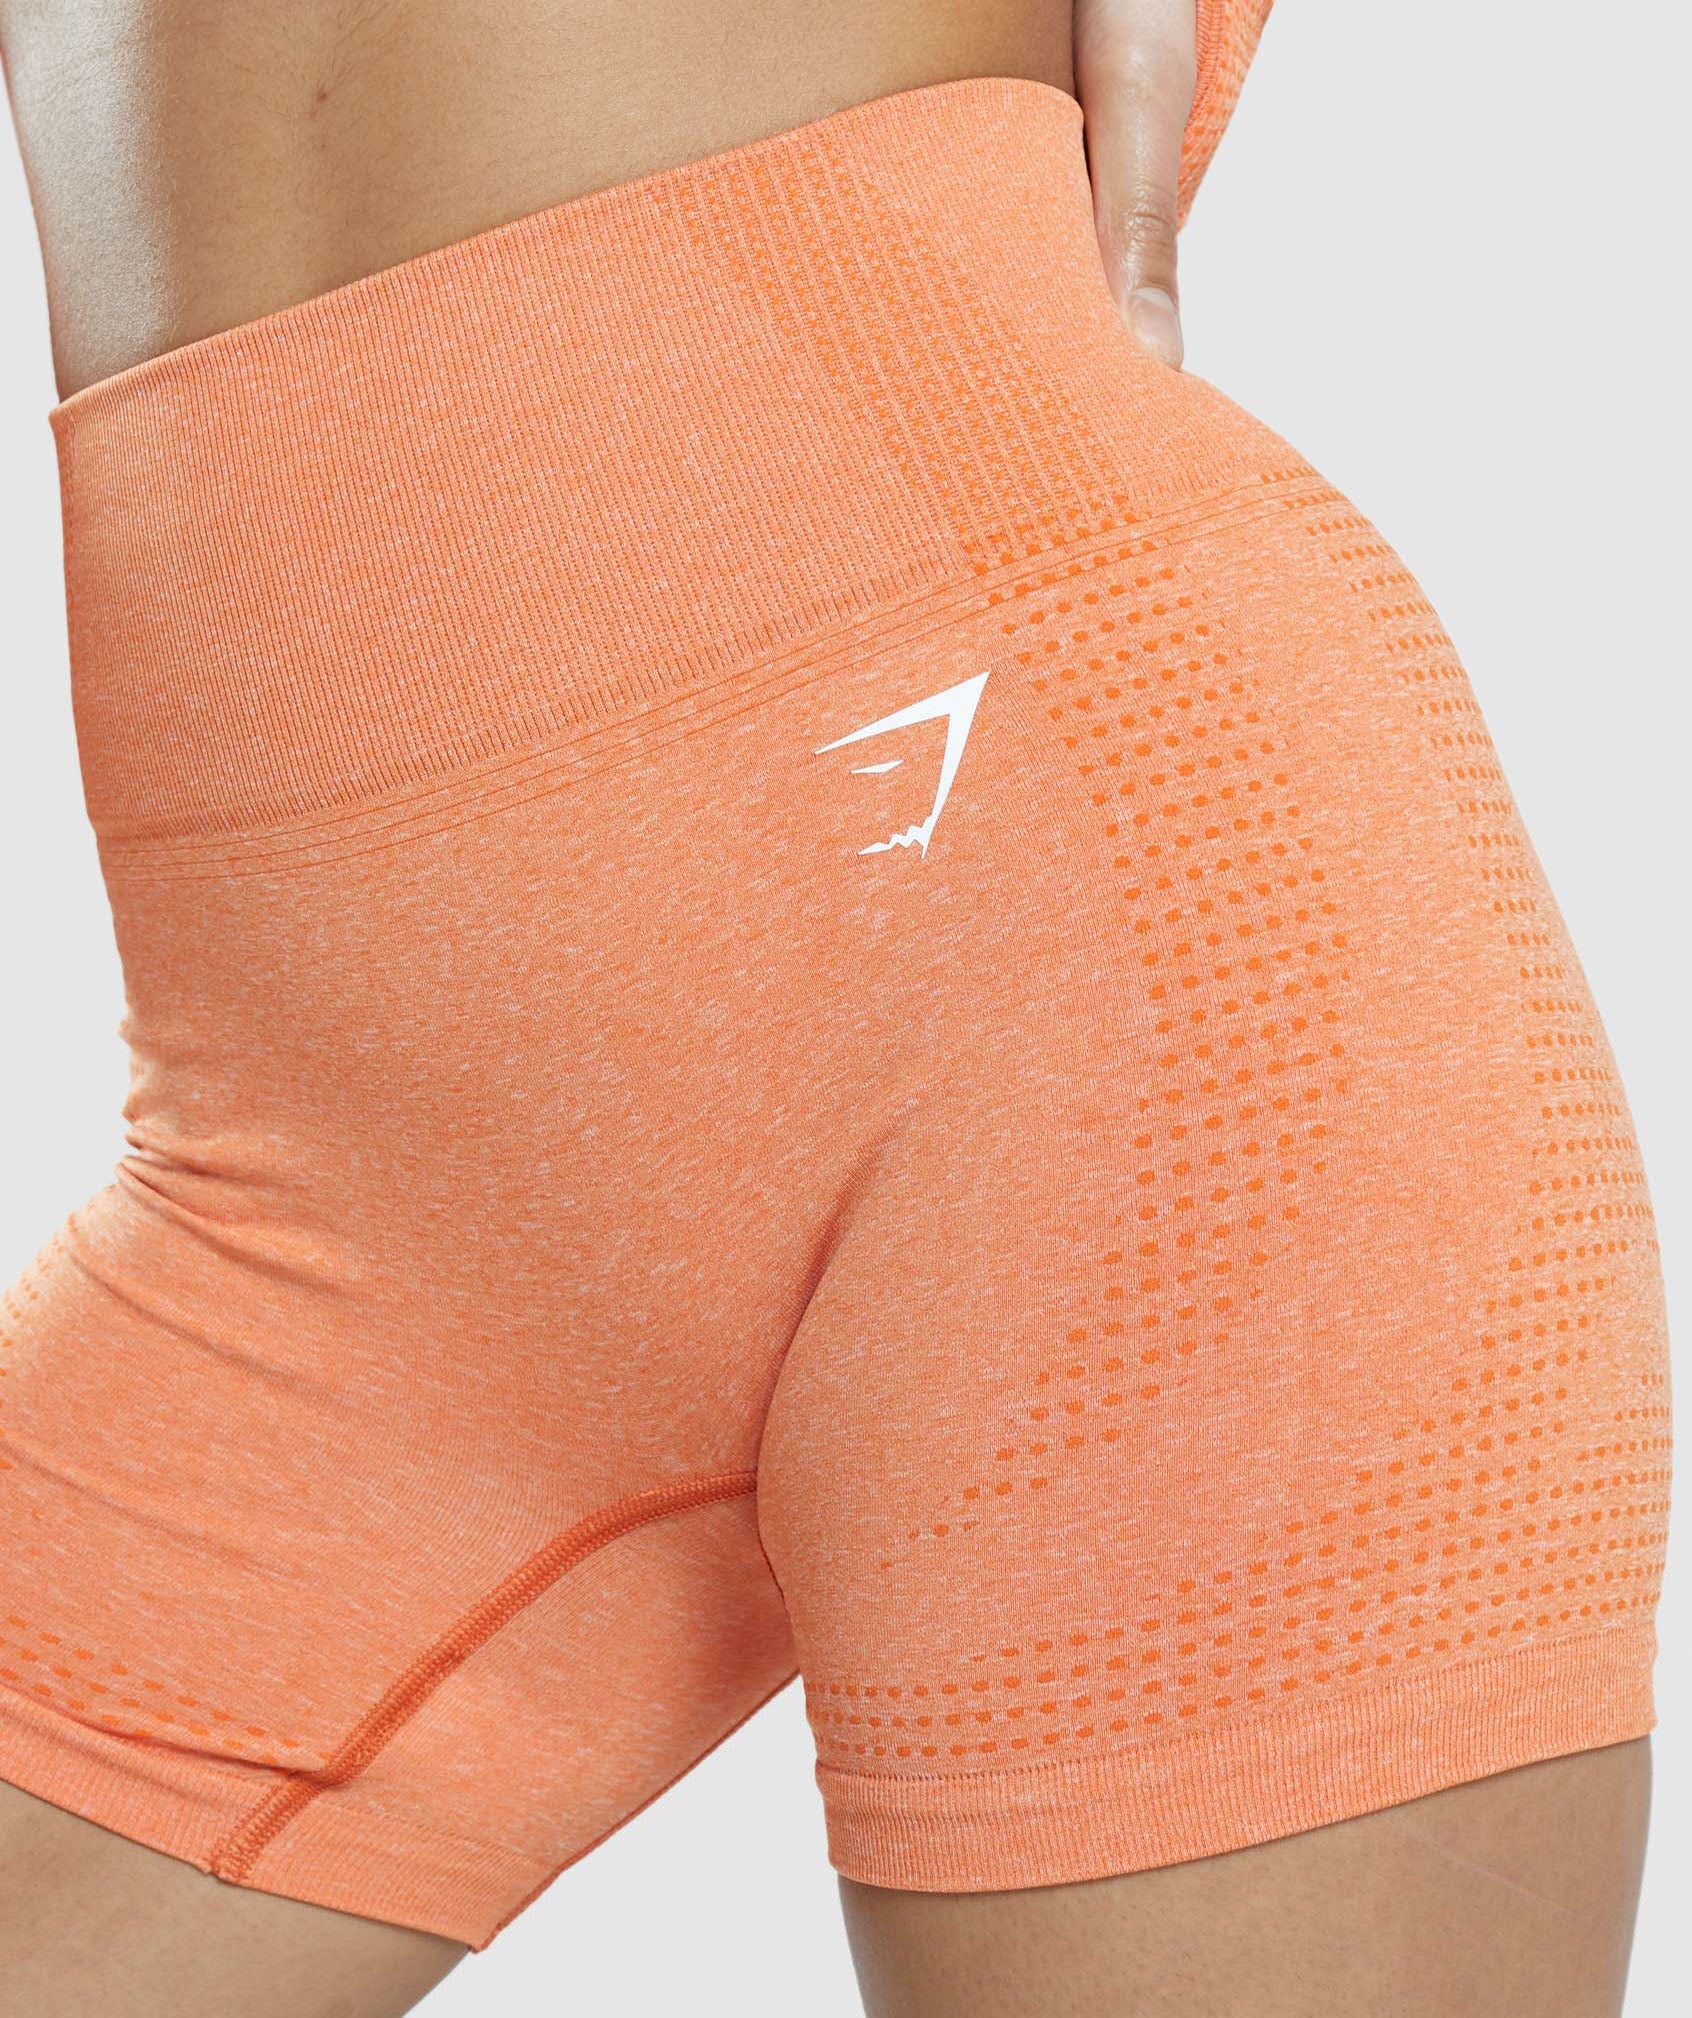 Vital Seamless 2.0 Shorts in Apricot Orange Marl - view 6